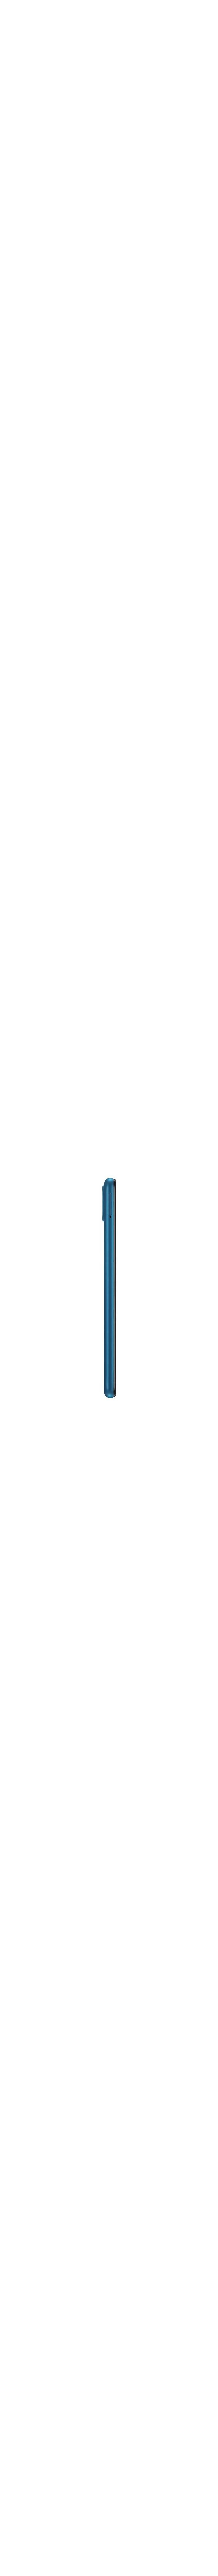 Samsung Galaxy A12 A127F EU 3/32GB, Android, blue